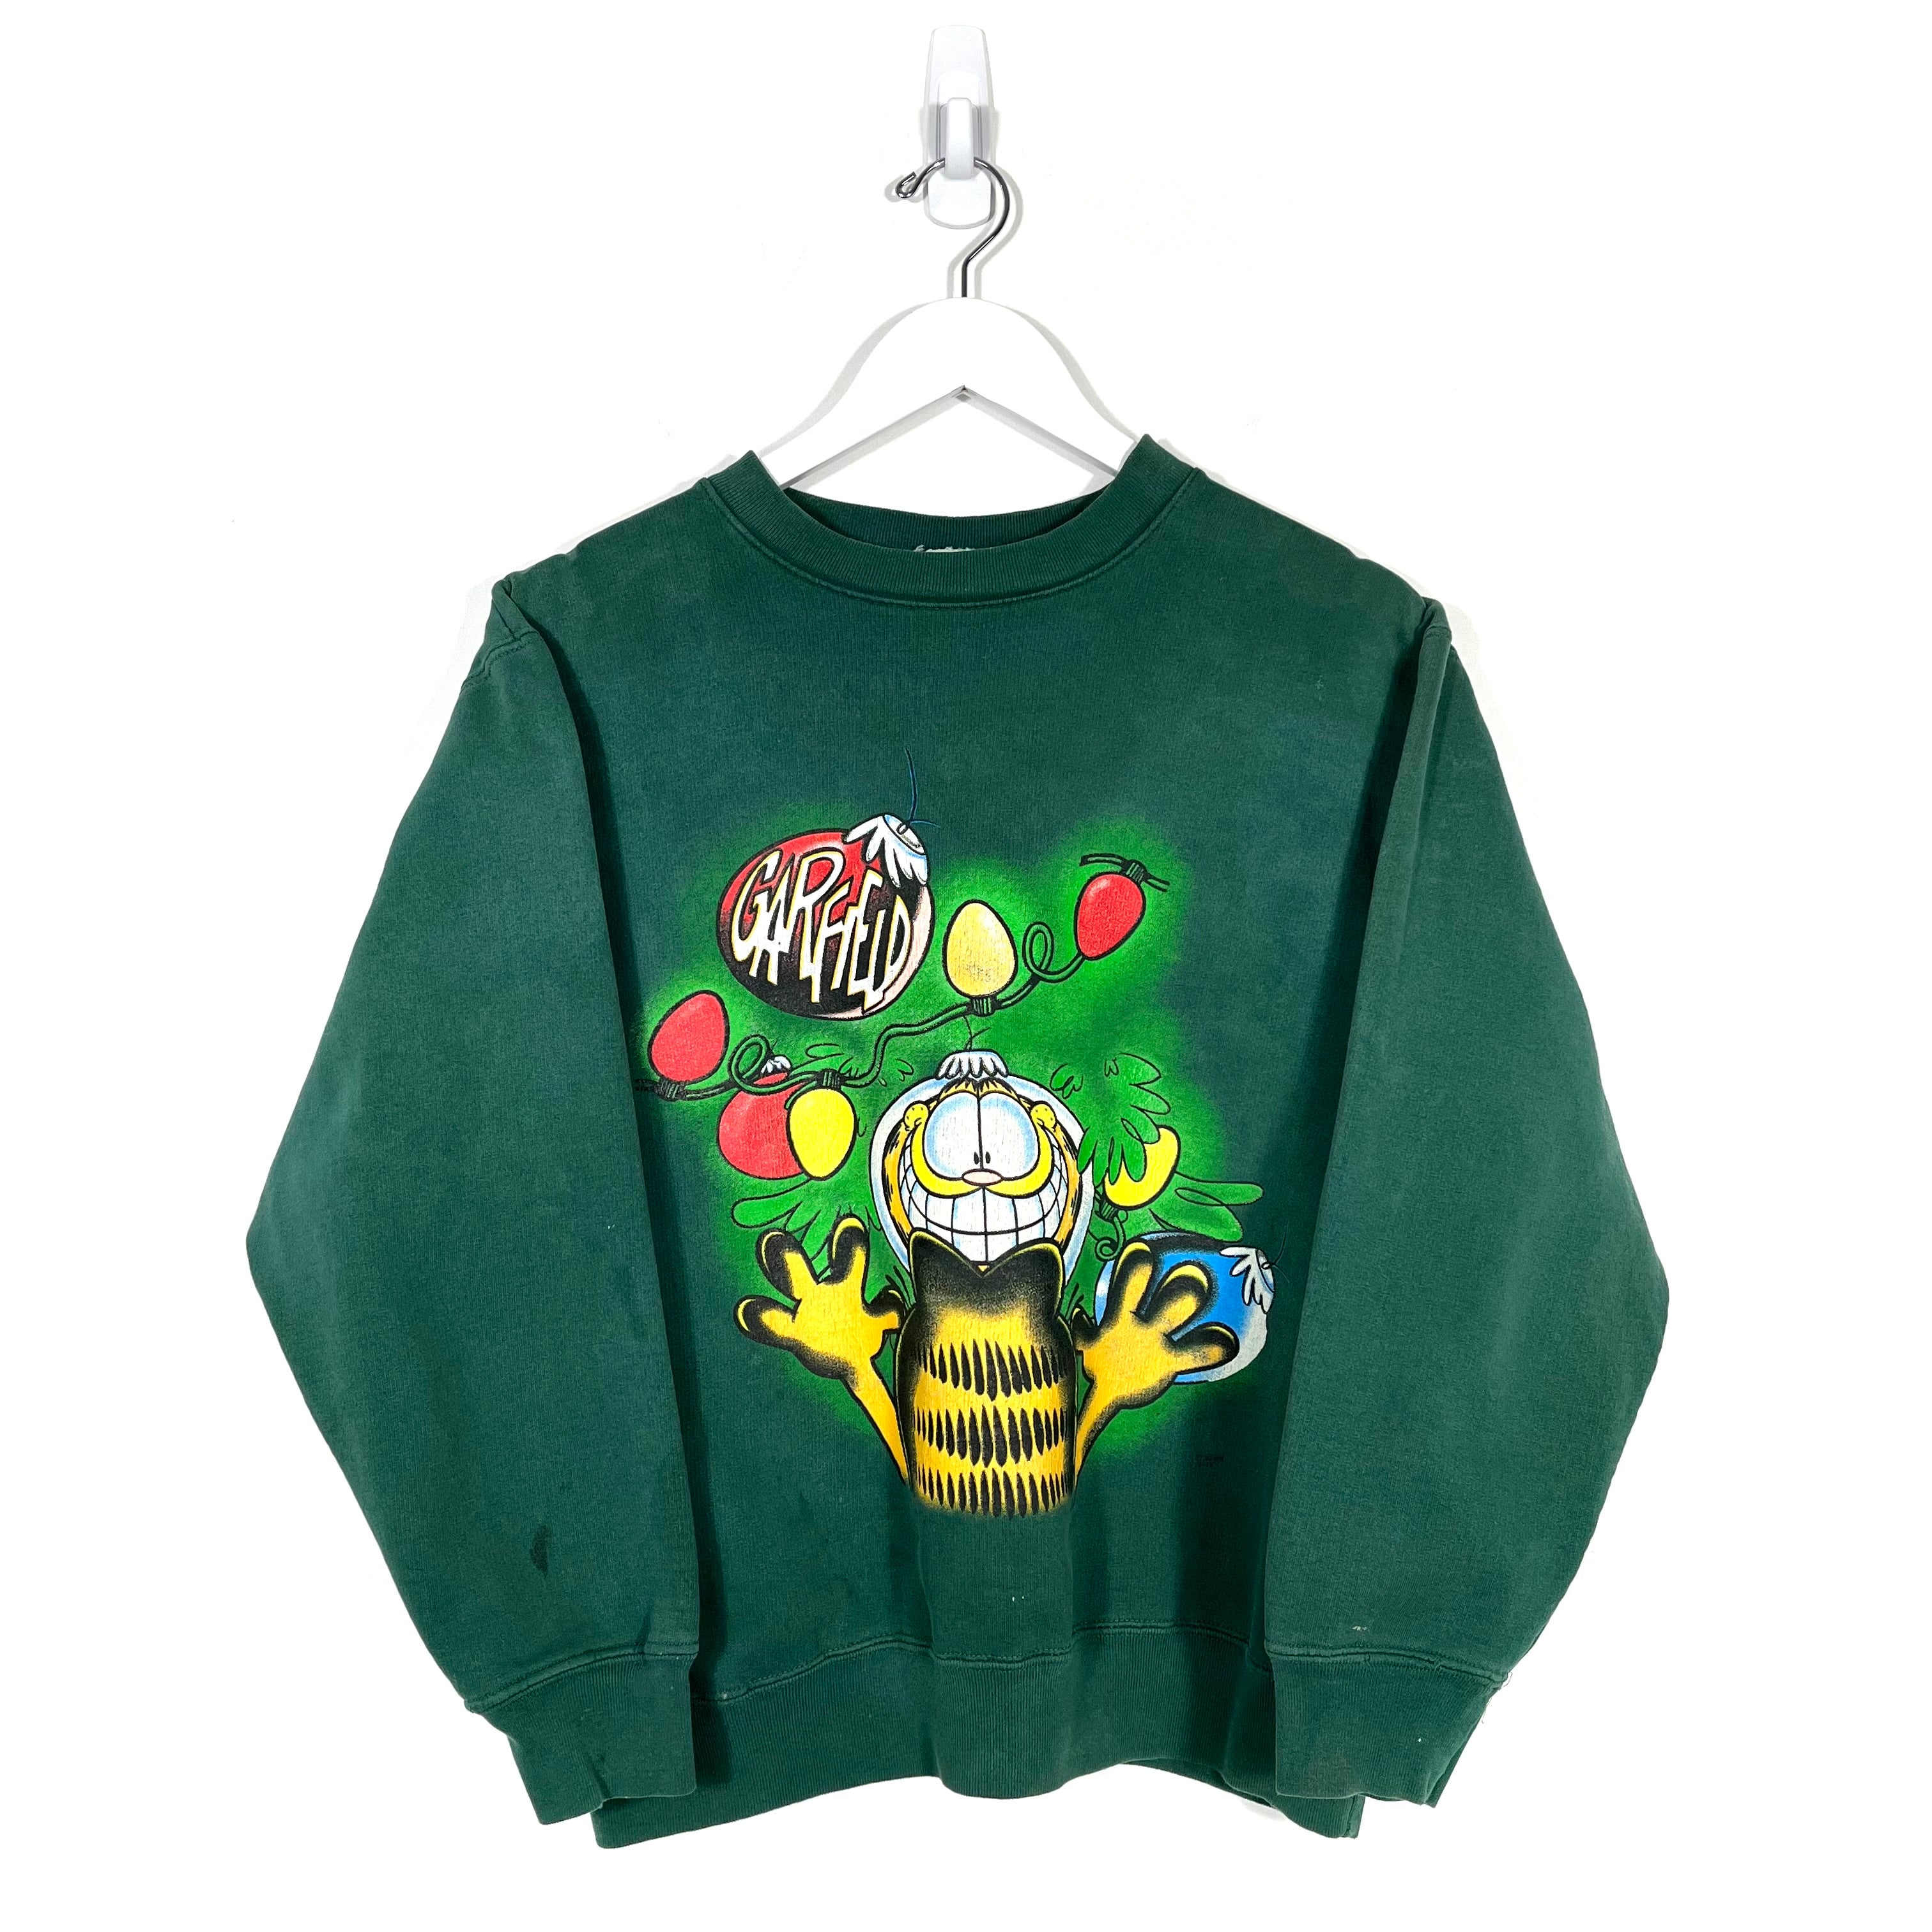 Vintage Garfield Christmas Crewneck Sweatshirt - Women's Small